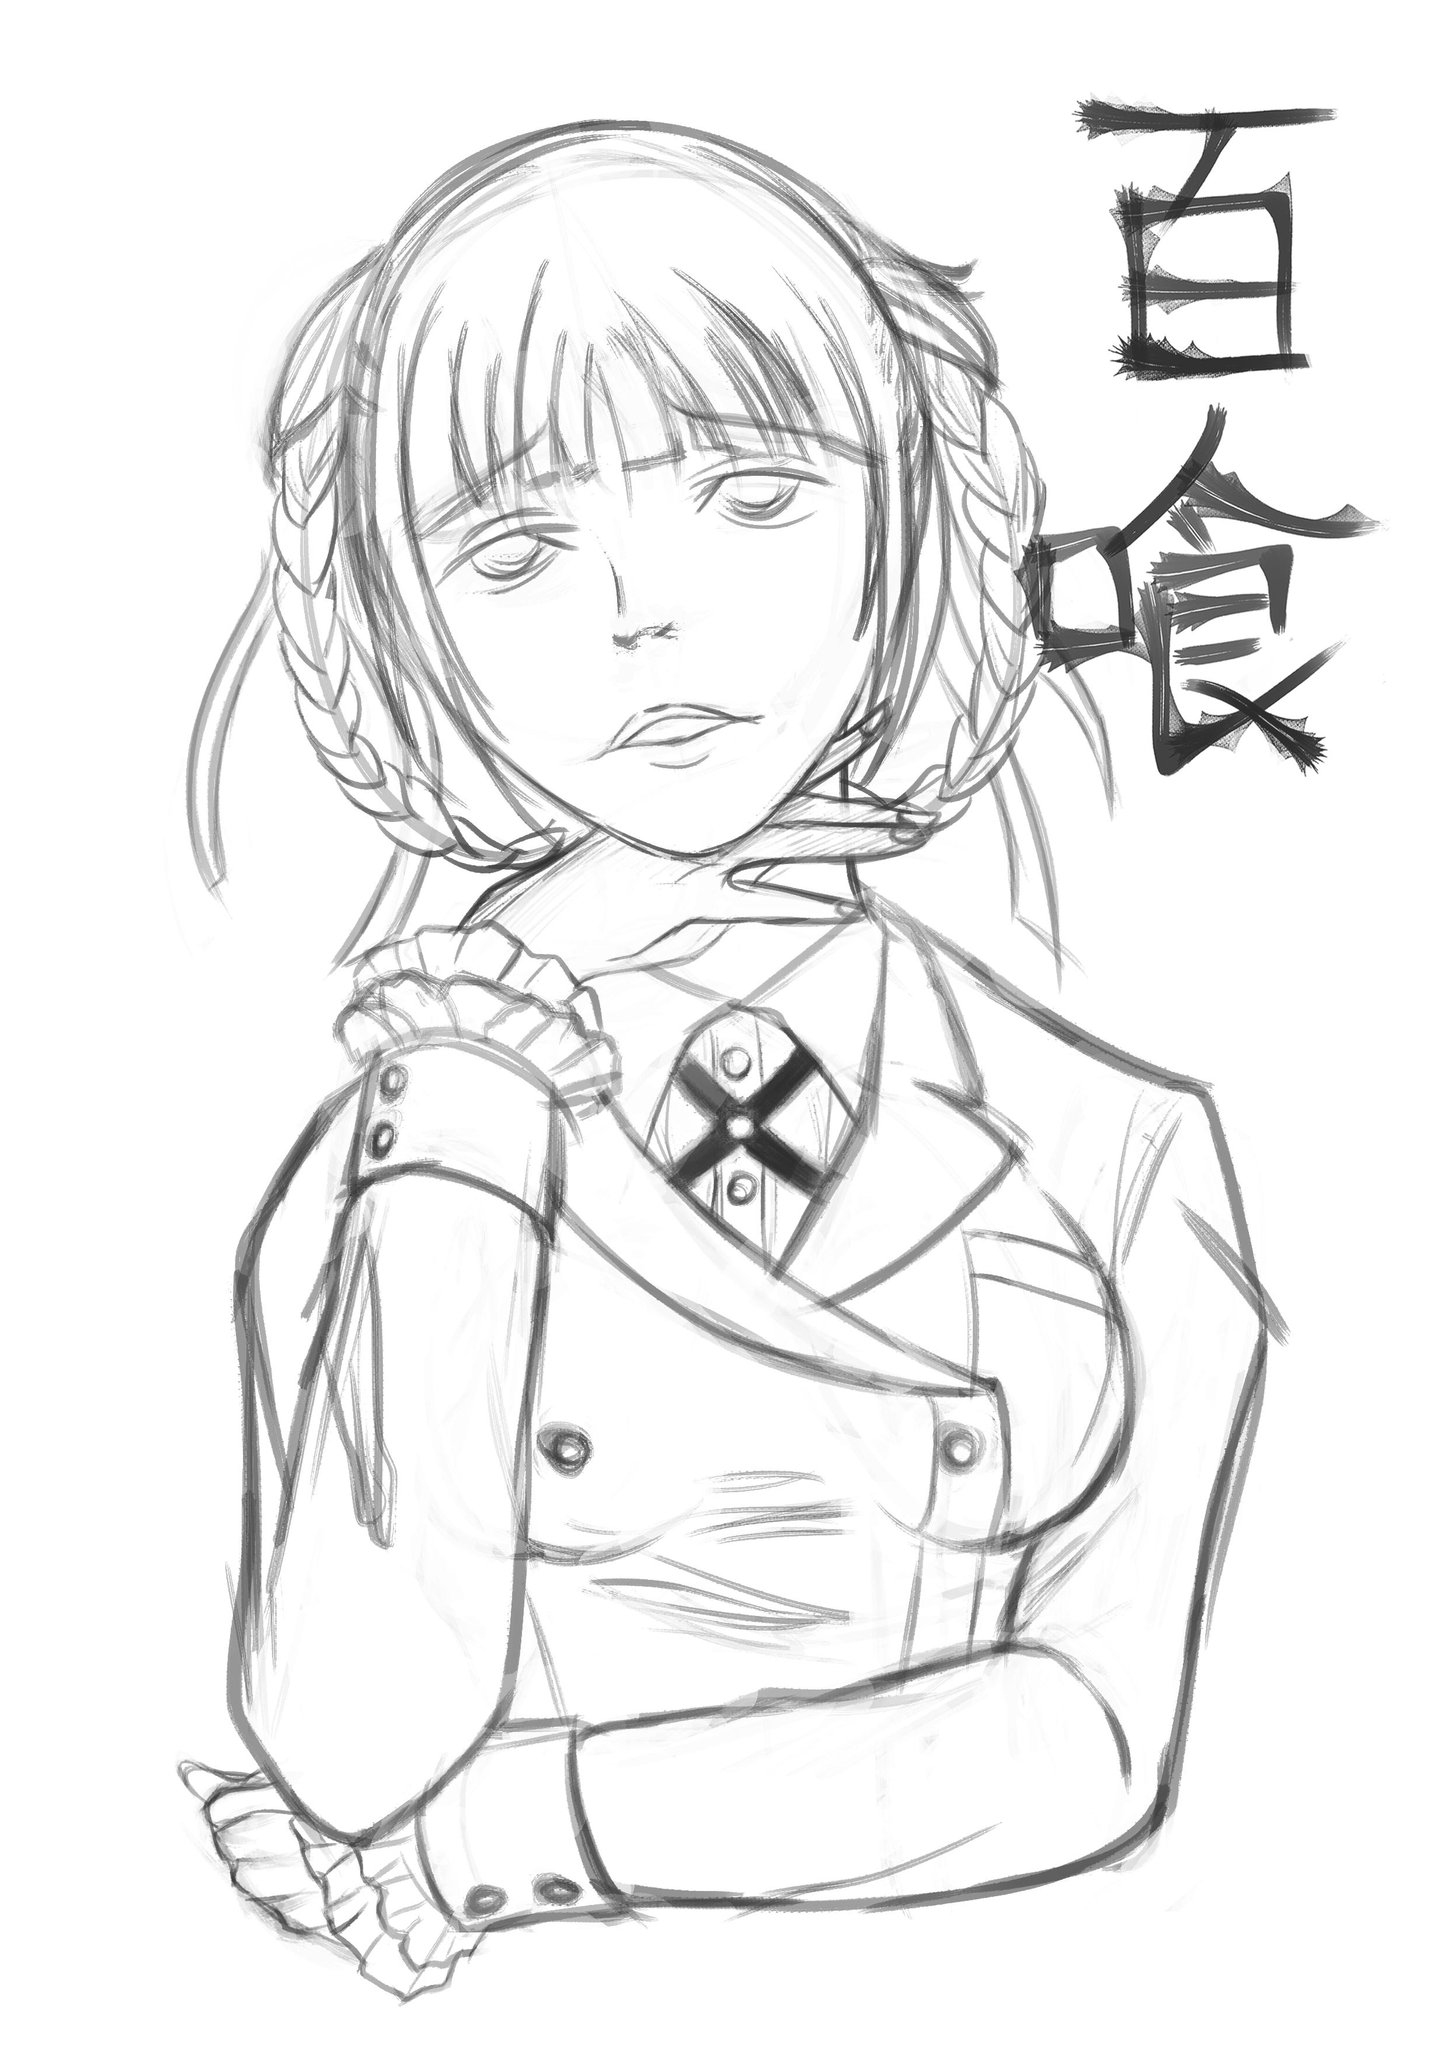 X äçbanana ð ããïãshall attempt to grayscale color this momobamikirari kakegurui anime character sketch female httpstcoqsikyjtclã x